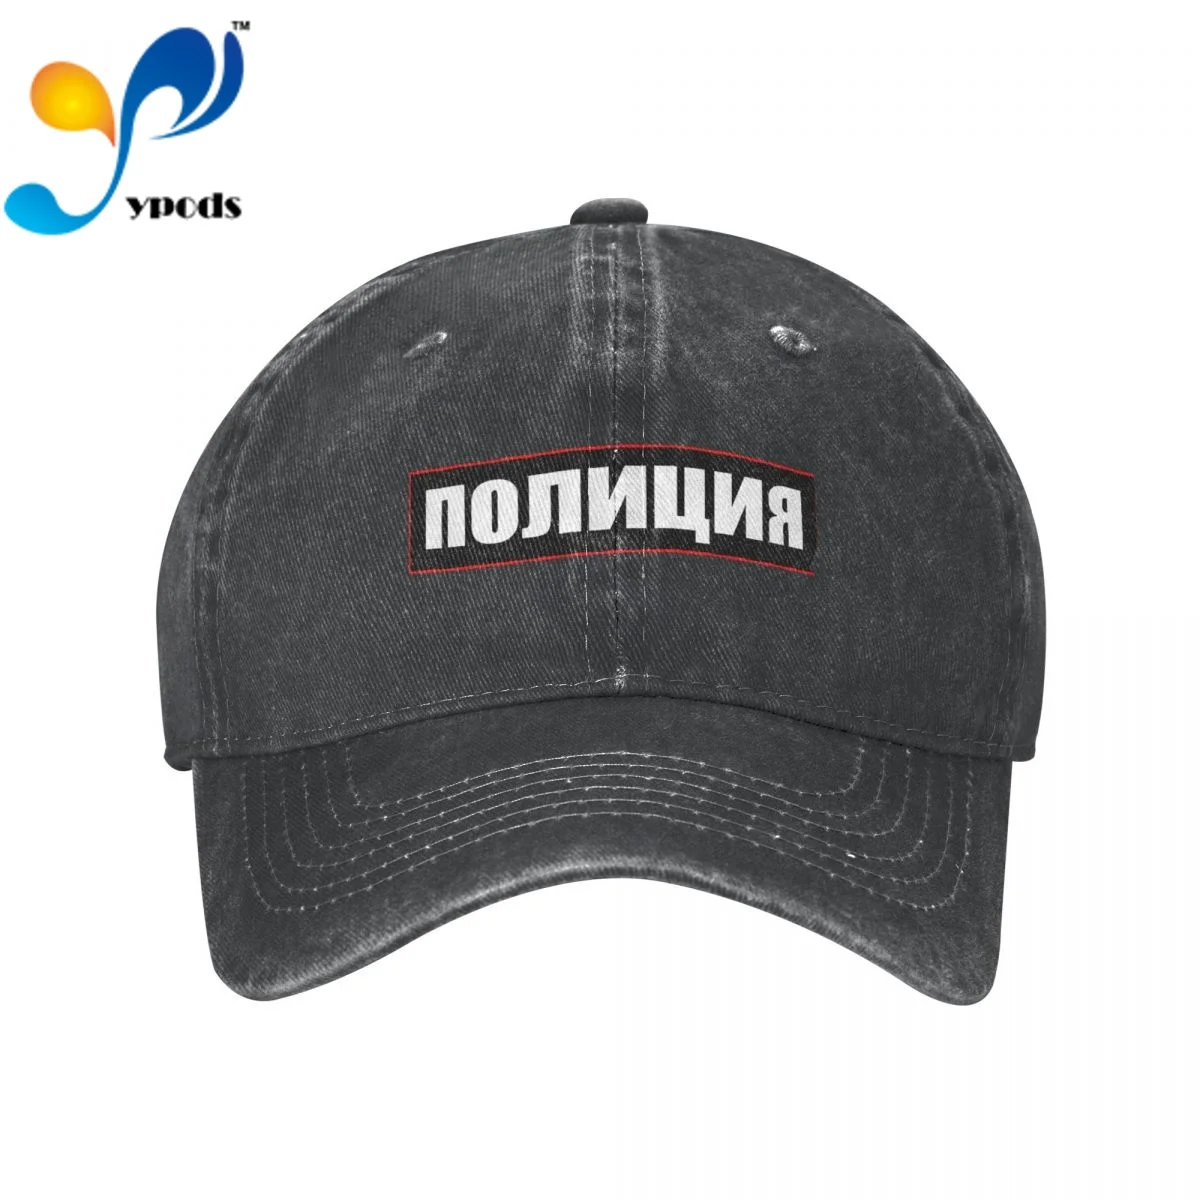 

Russian Police Emblem Women Men Cotton Baseball Cap Unisex Casual Caps Outdoor Trucker Snapback Hats